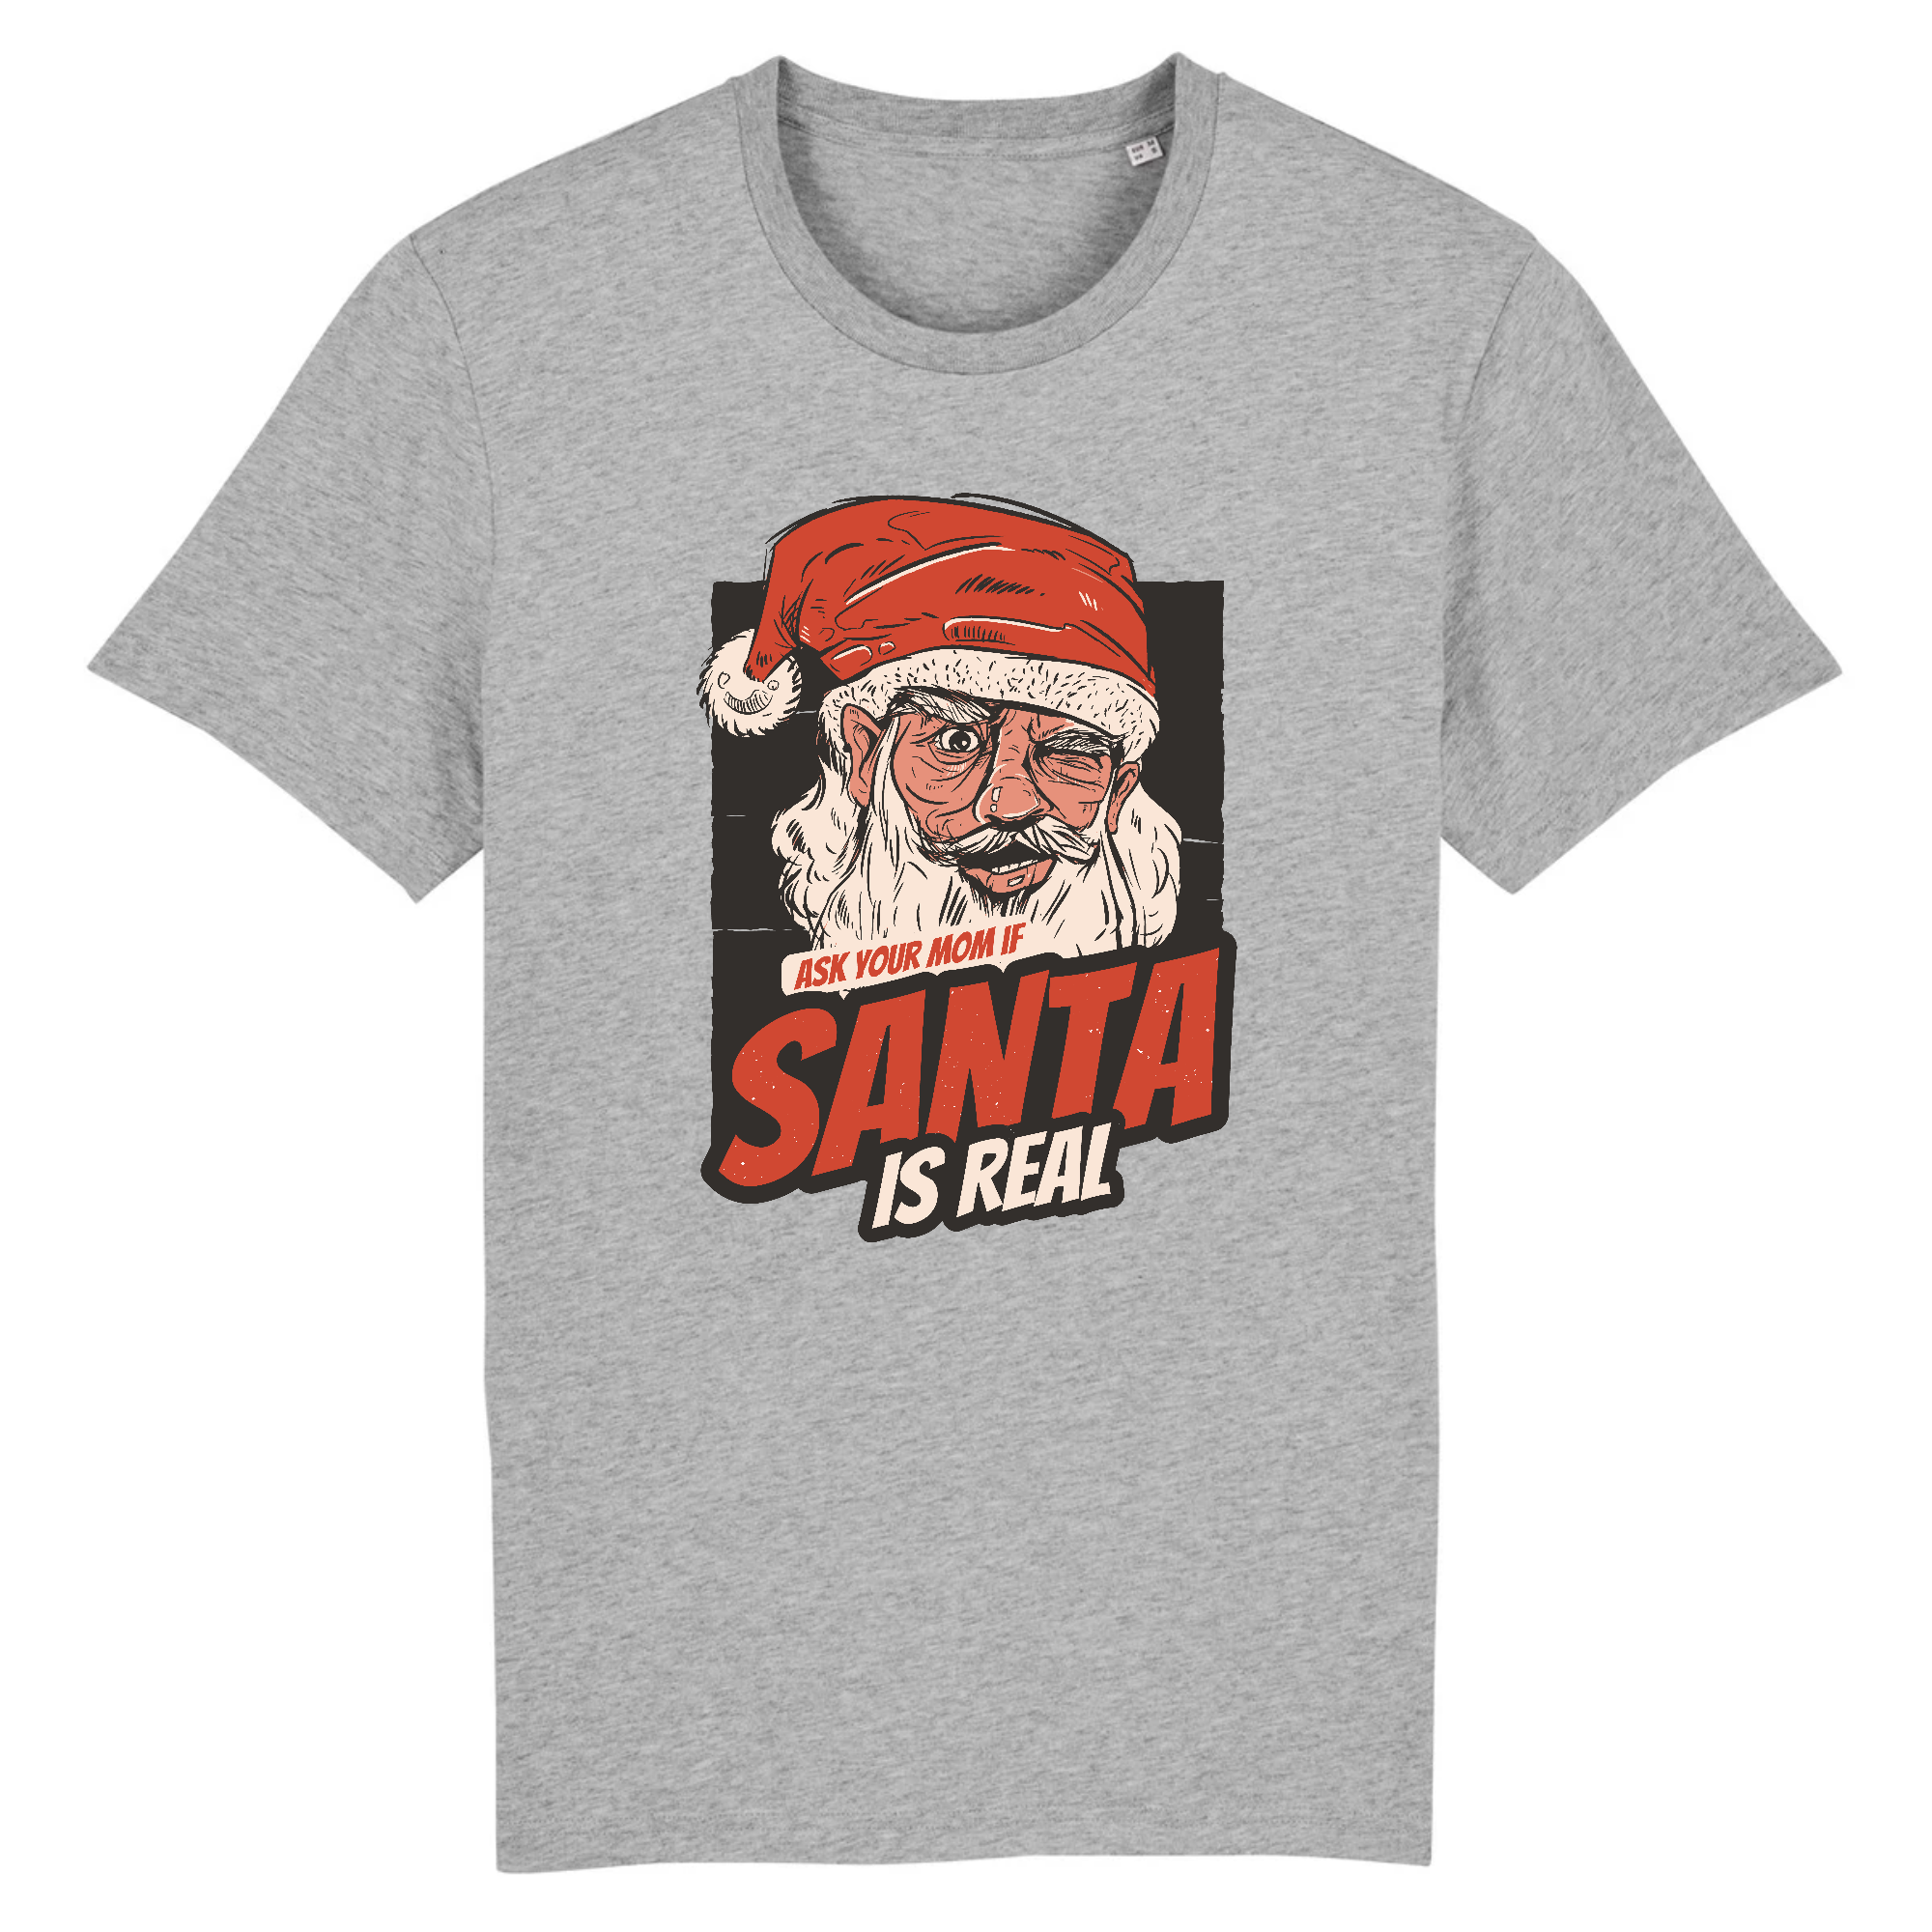 T-Shirt de Noël - ASK YOUR MOM IF "SANTA IS REAL"